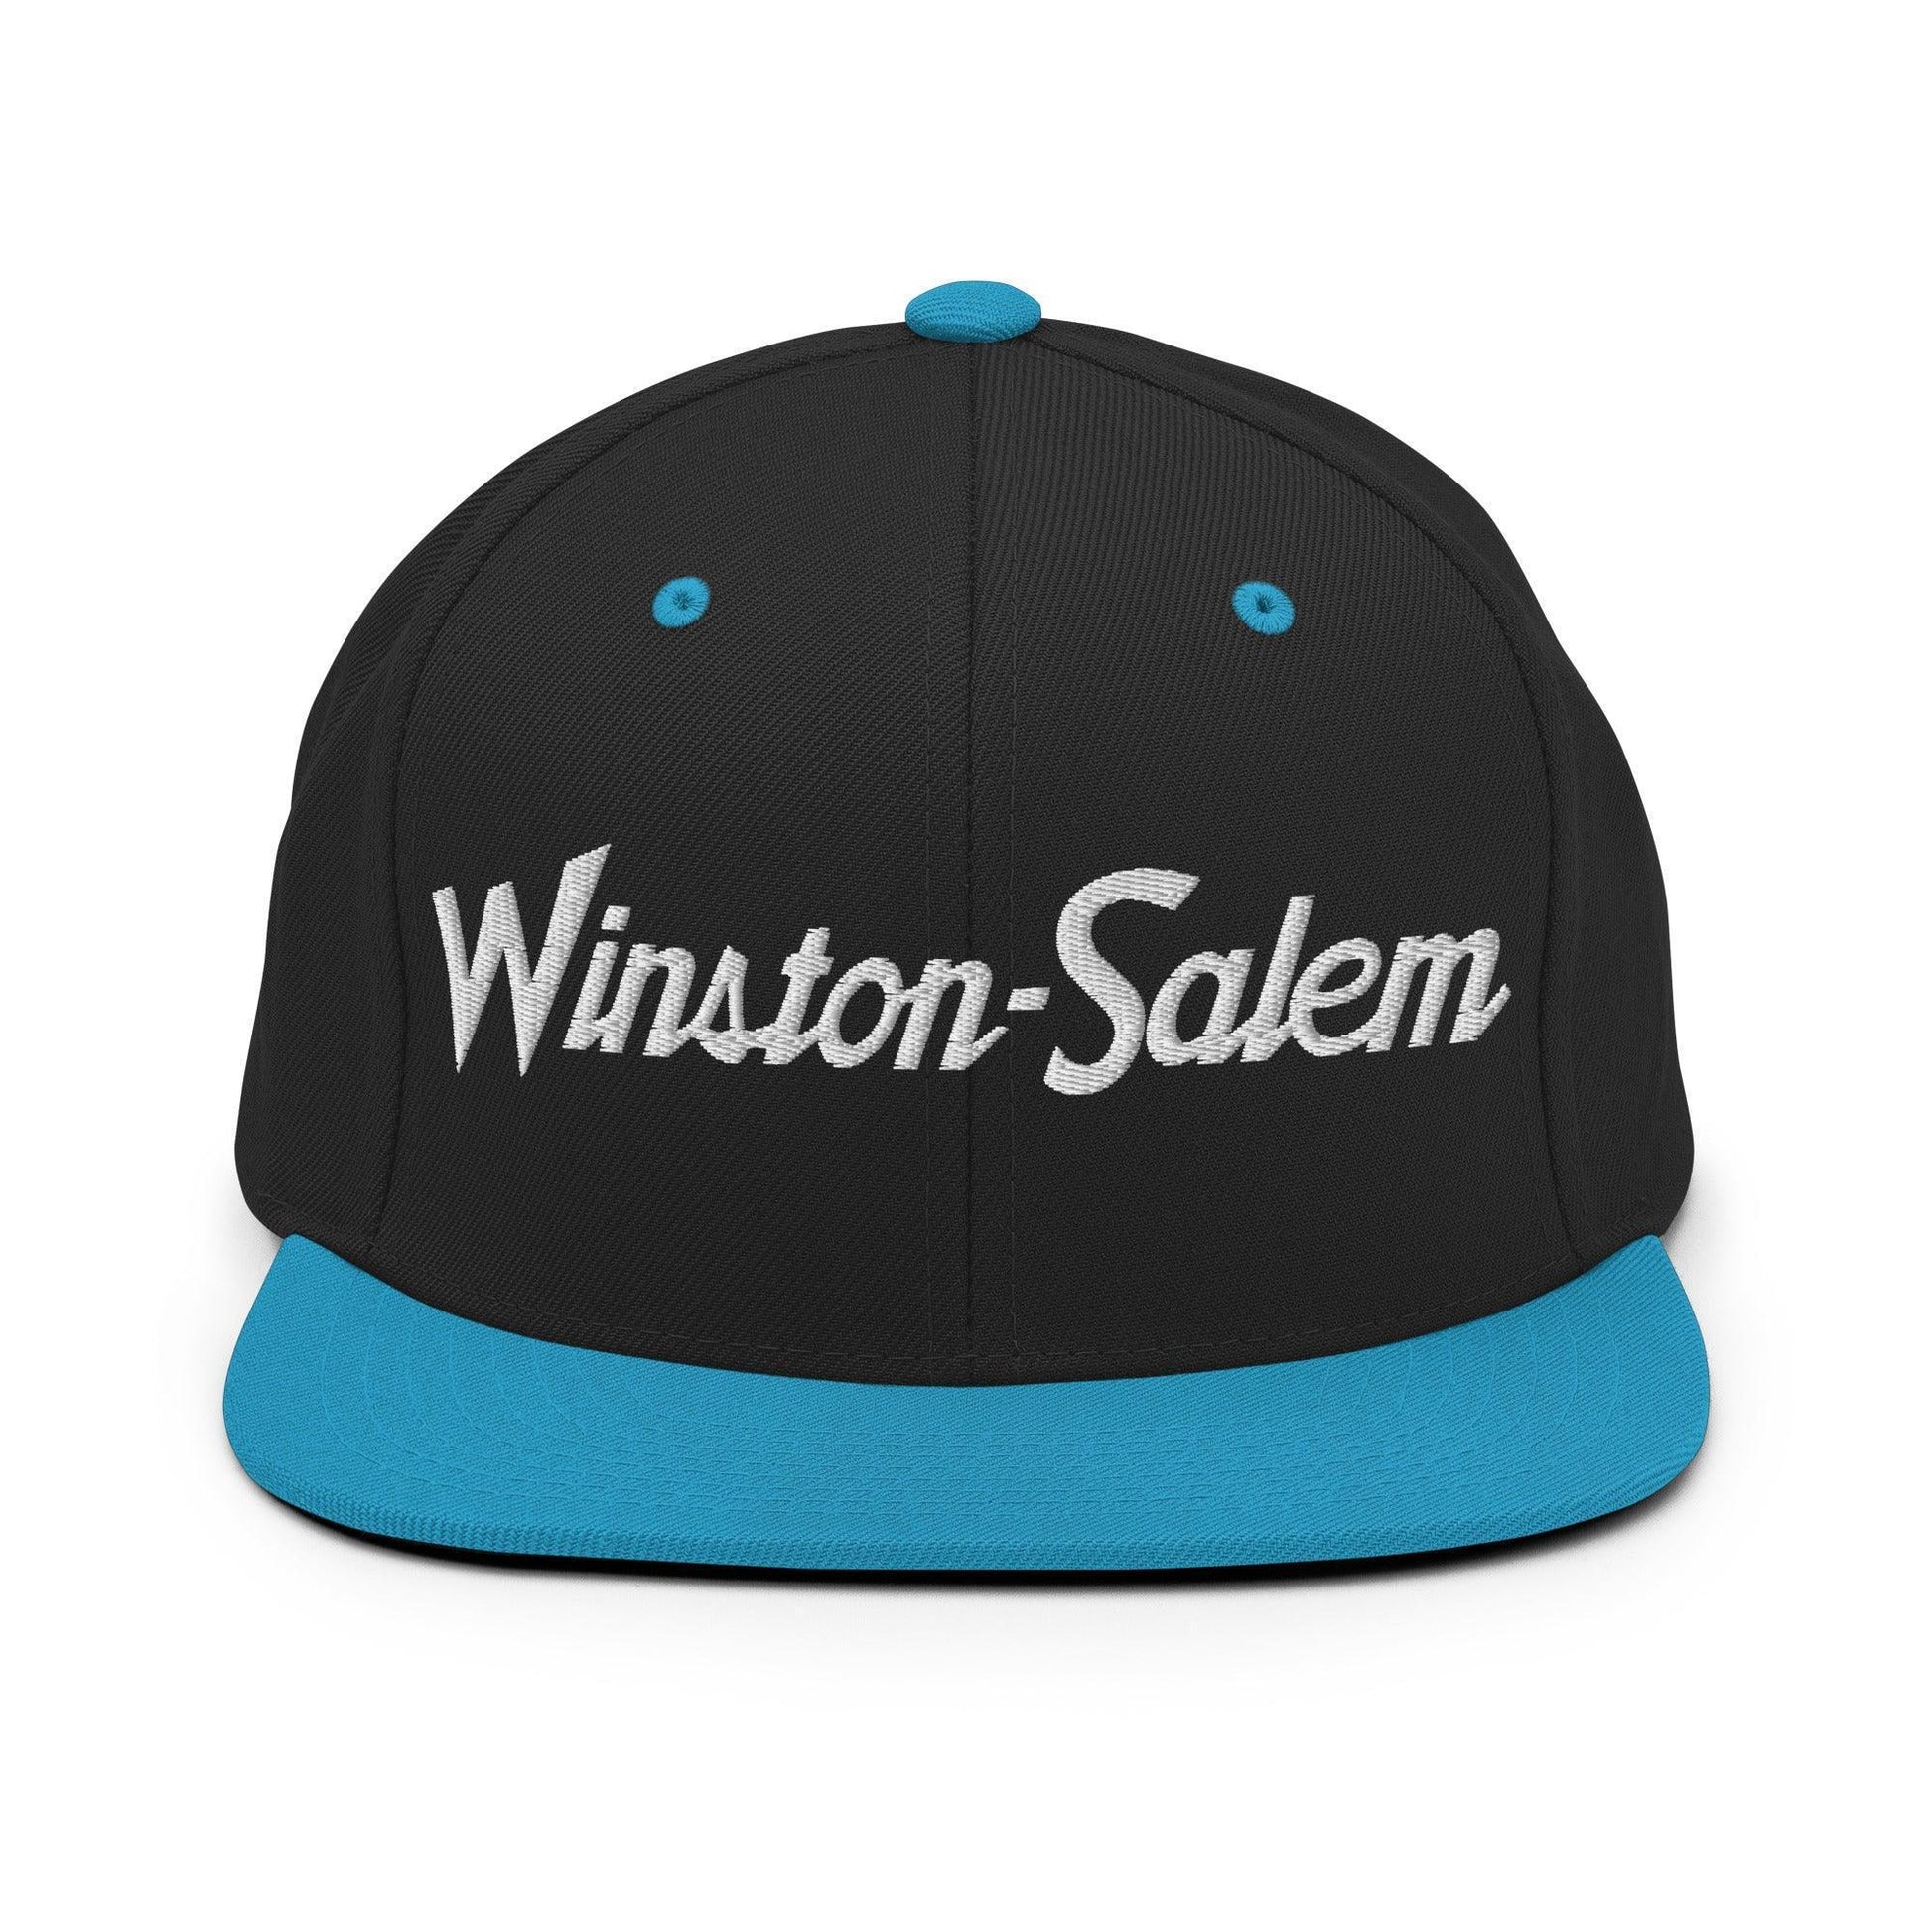 Winston-Salem Script Snapback Hat Black/ Teal